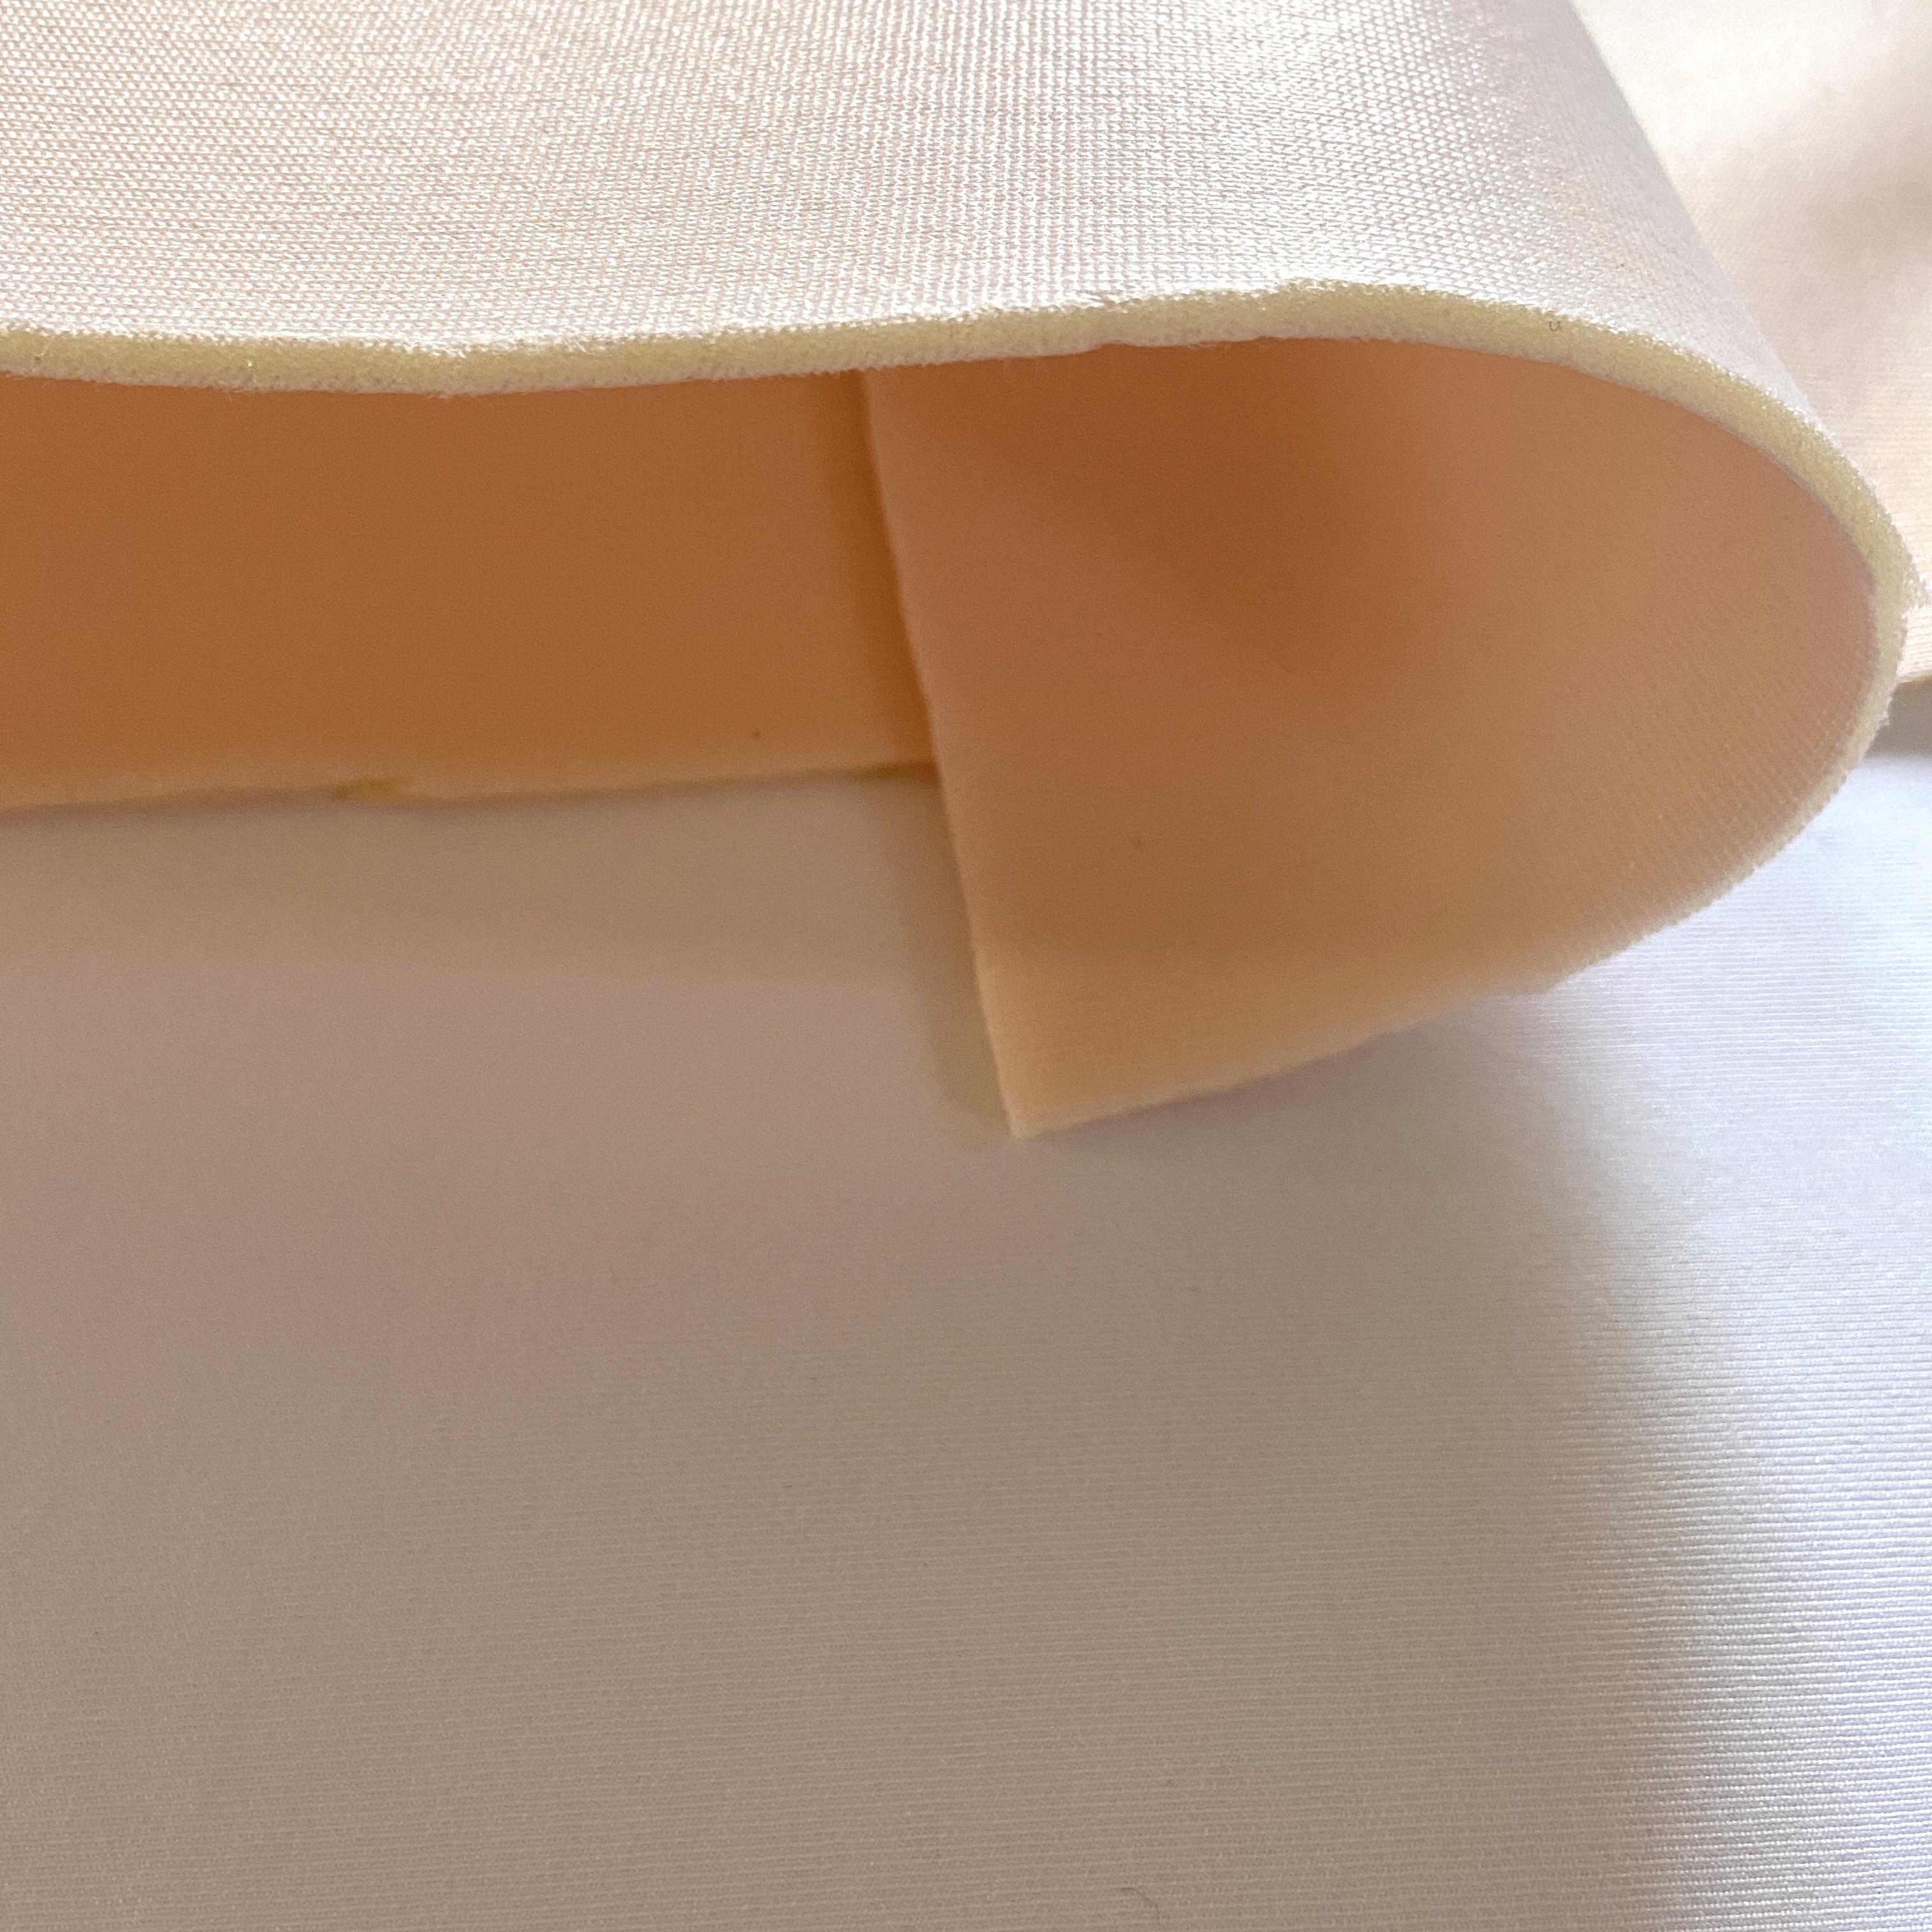 Bra Foam Padding Fabric - Pale PINK - 2mm - Cut & Sew - Smooth Faced - 60cm  x 50cm, per piece (S)